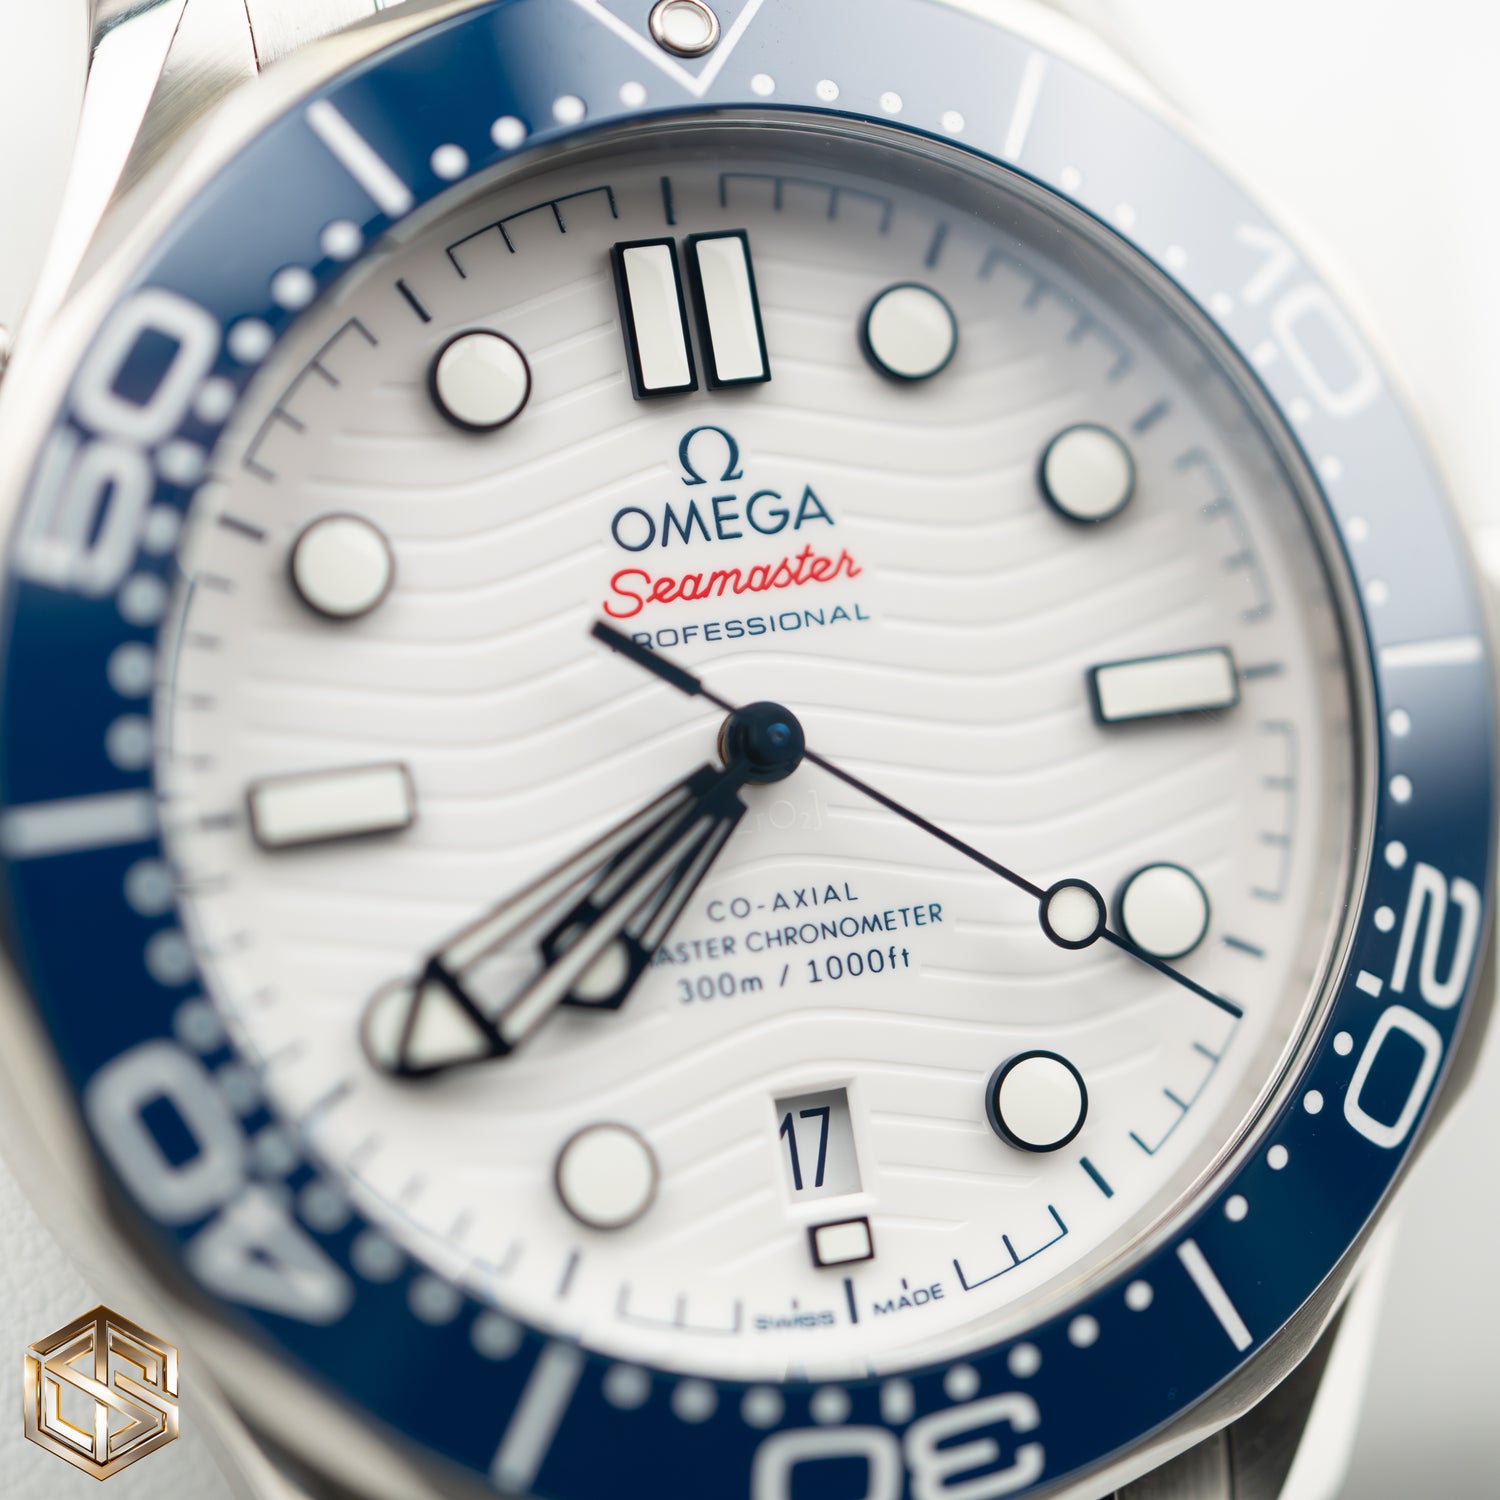 Omega 522.30.42.20.04.001 'Tokyo 2020' Seamaster Diver 300m Full Set Watch